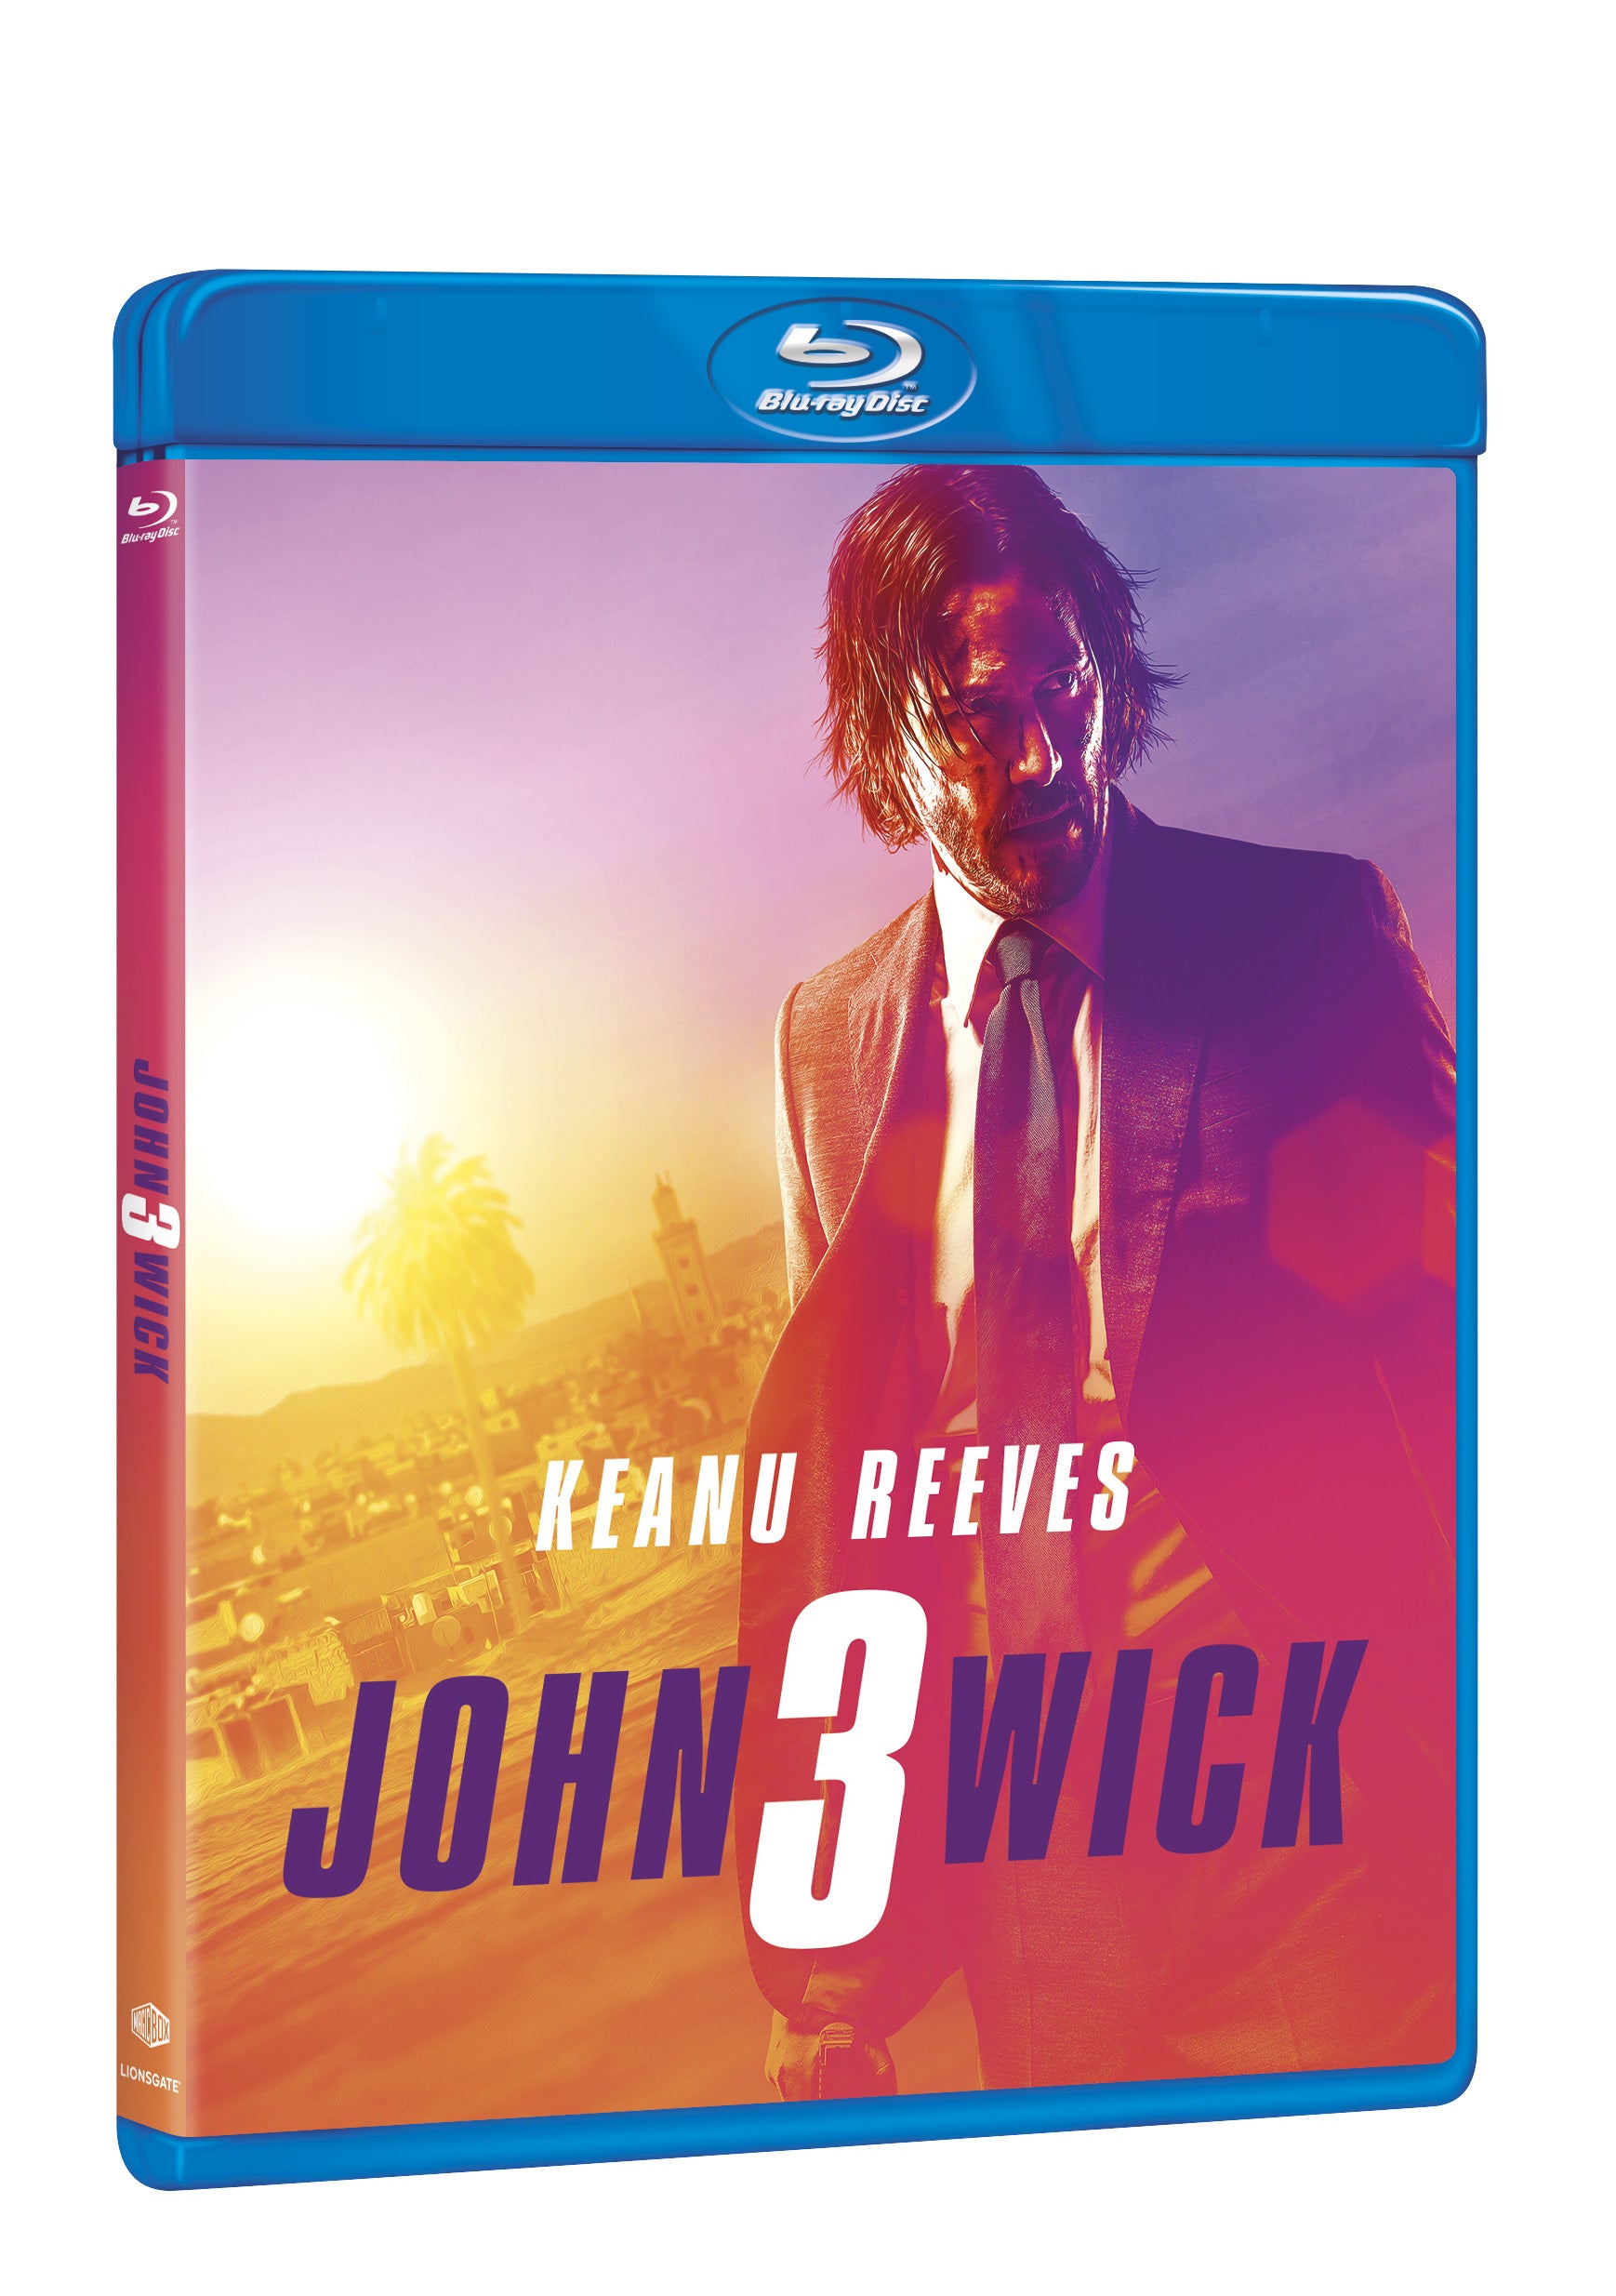 John Wick 3 BD / John Wick 3 - Czech version